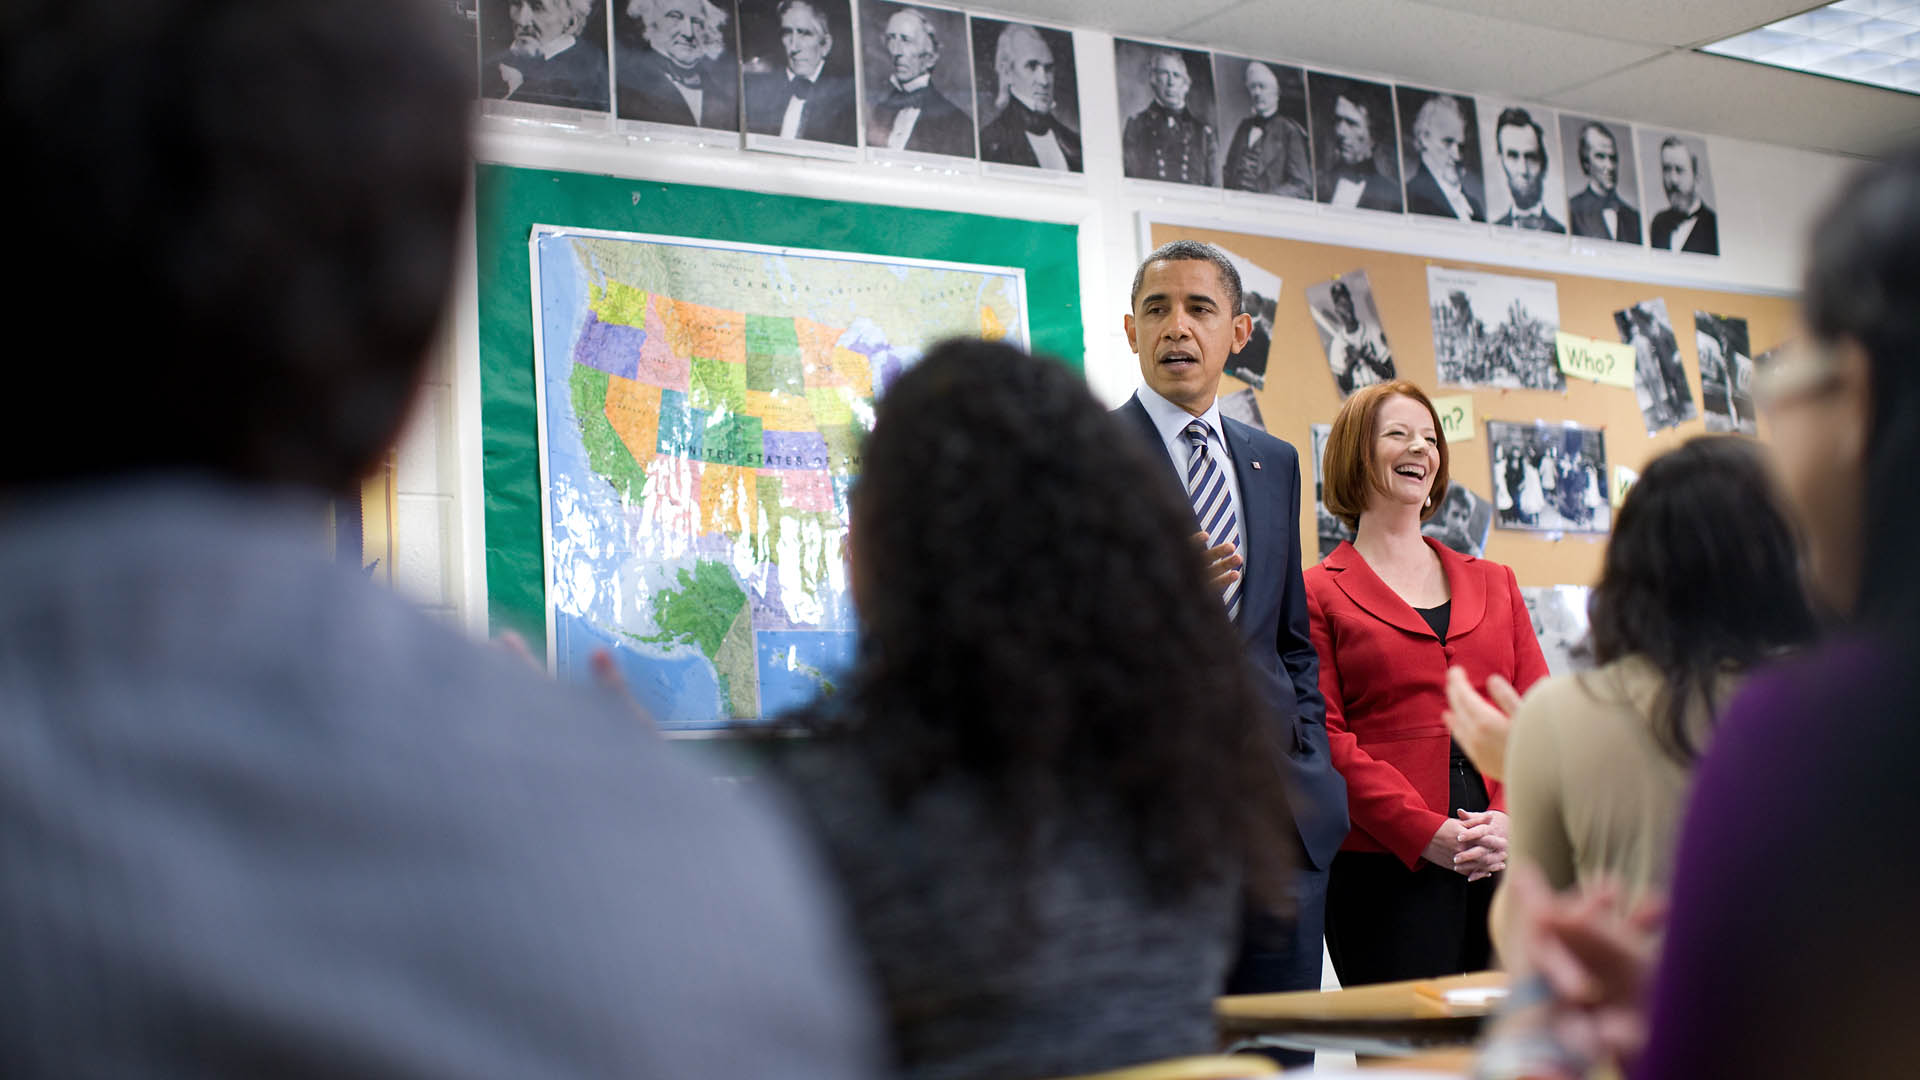 President Obama Visits School With Prime Minister Gillard